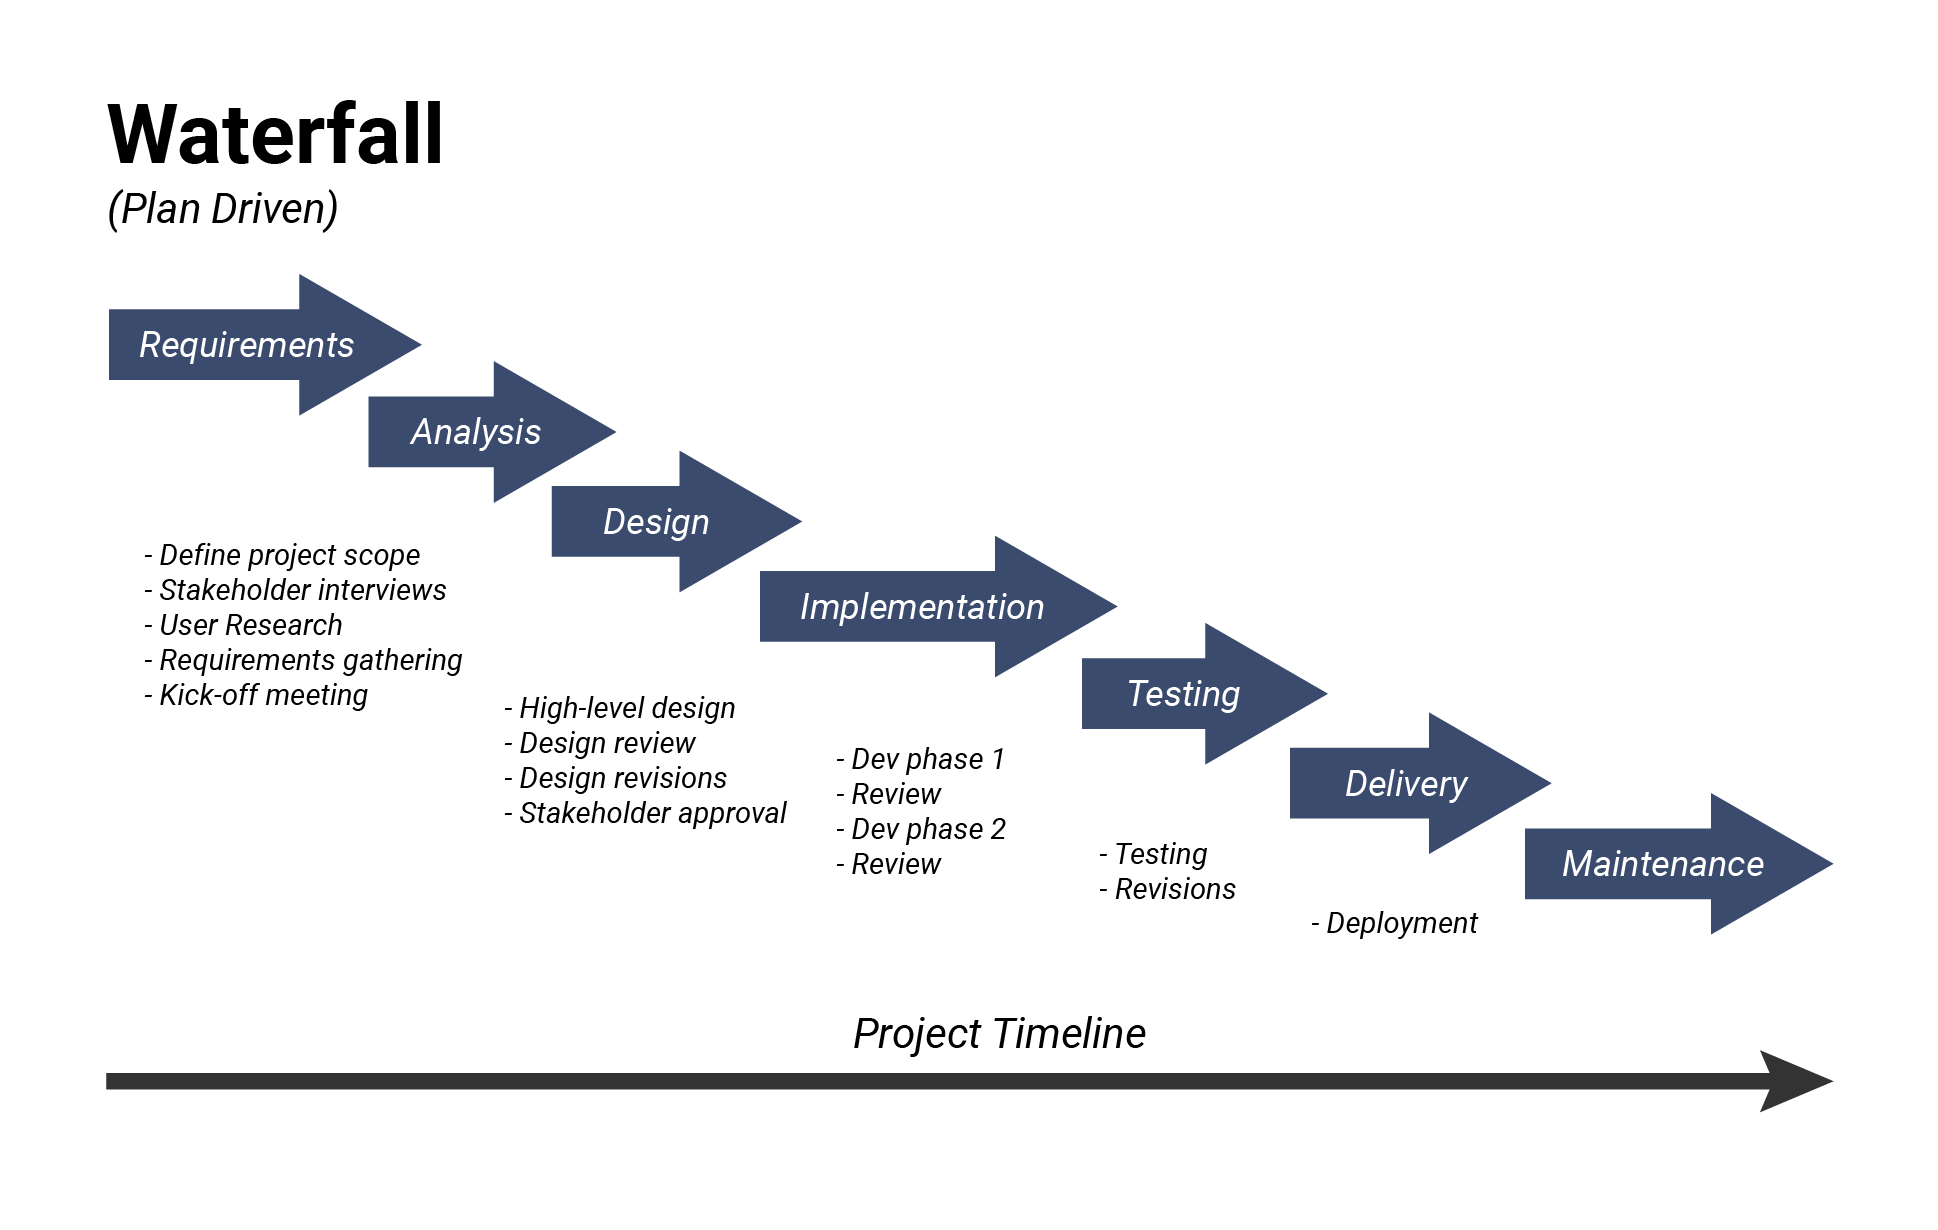 waterfall development approach